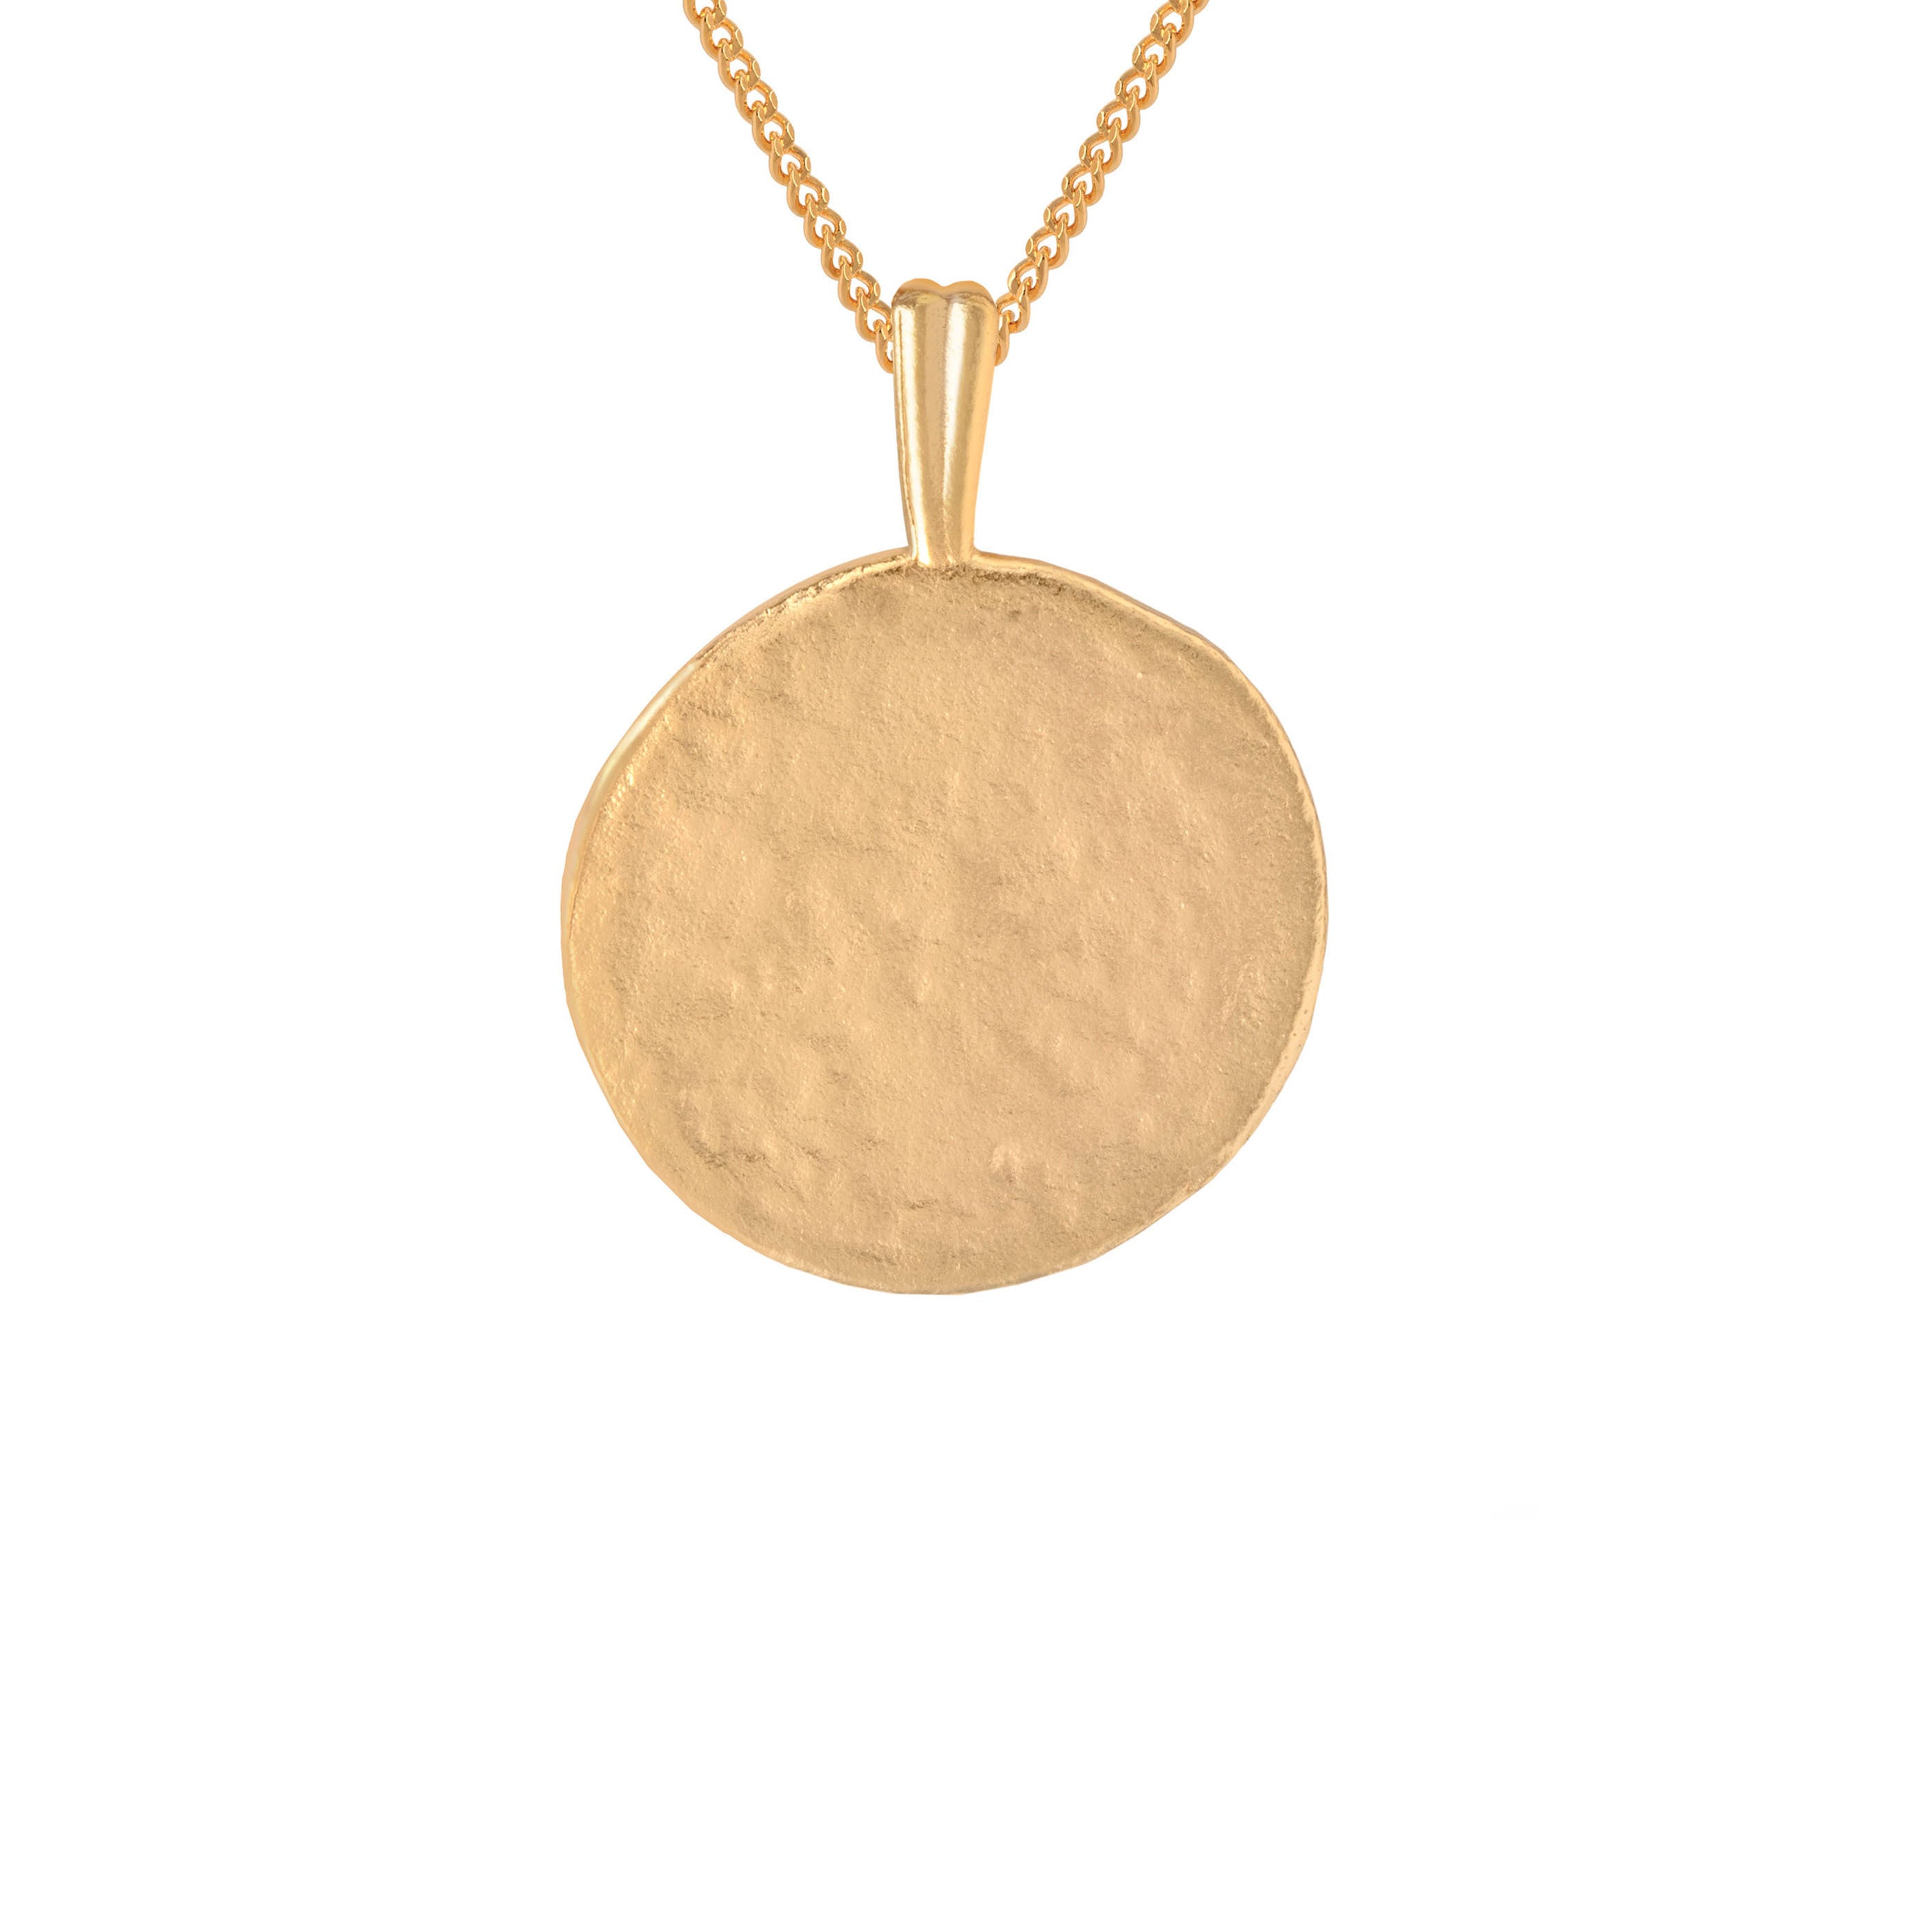 Gemini Zodiac Pendant Necklace in Gold back of pendant